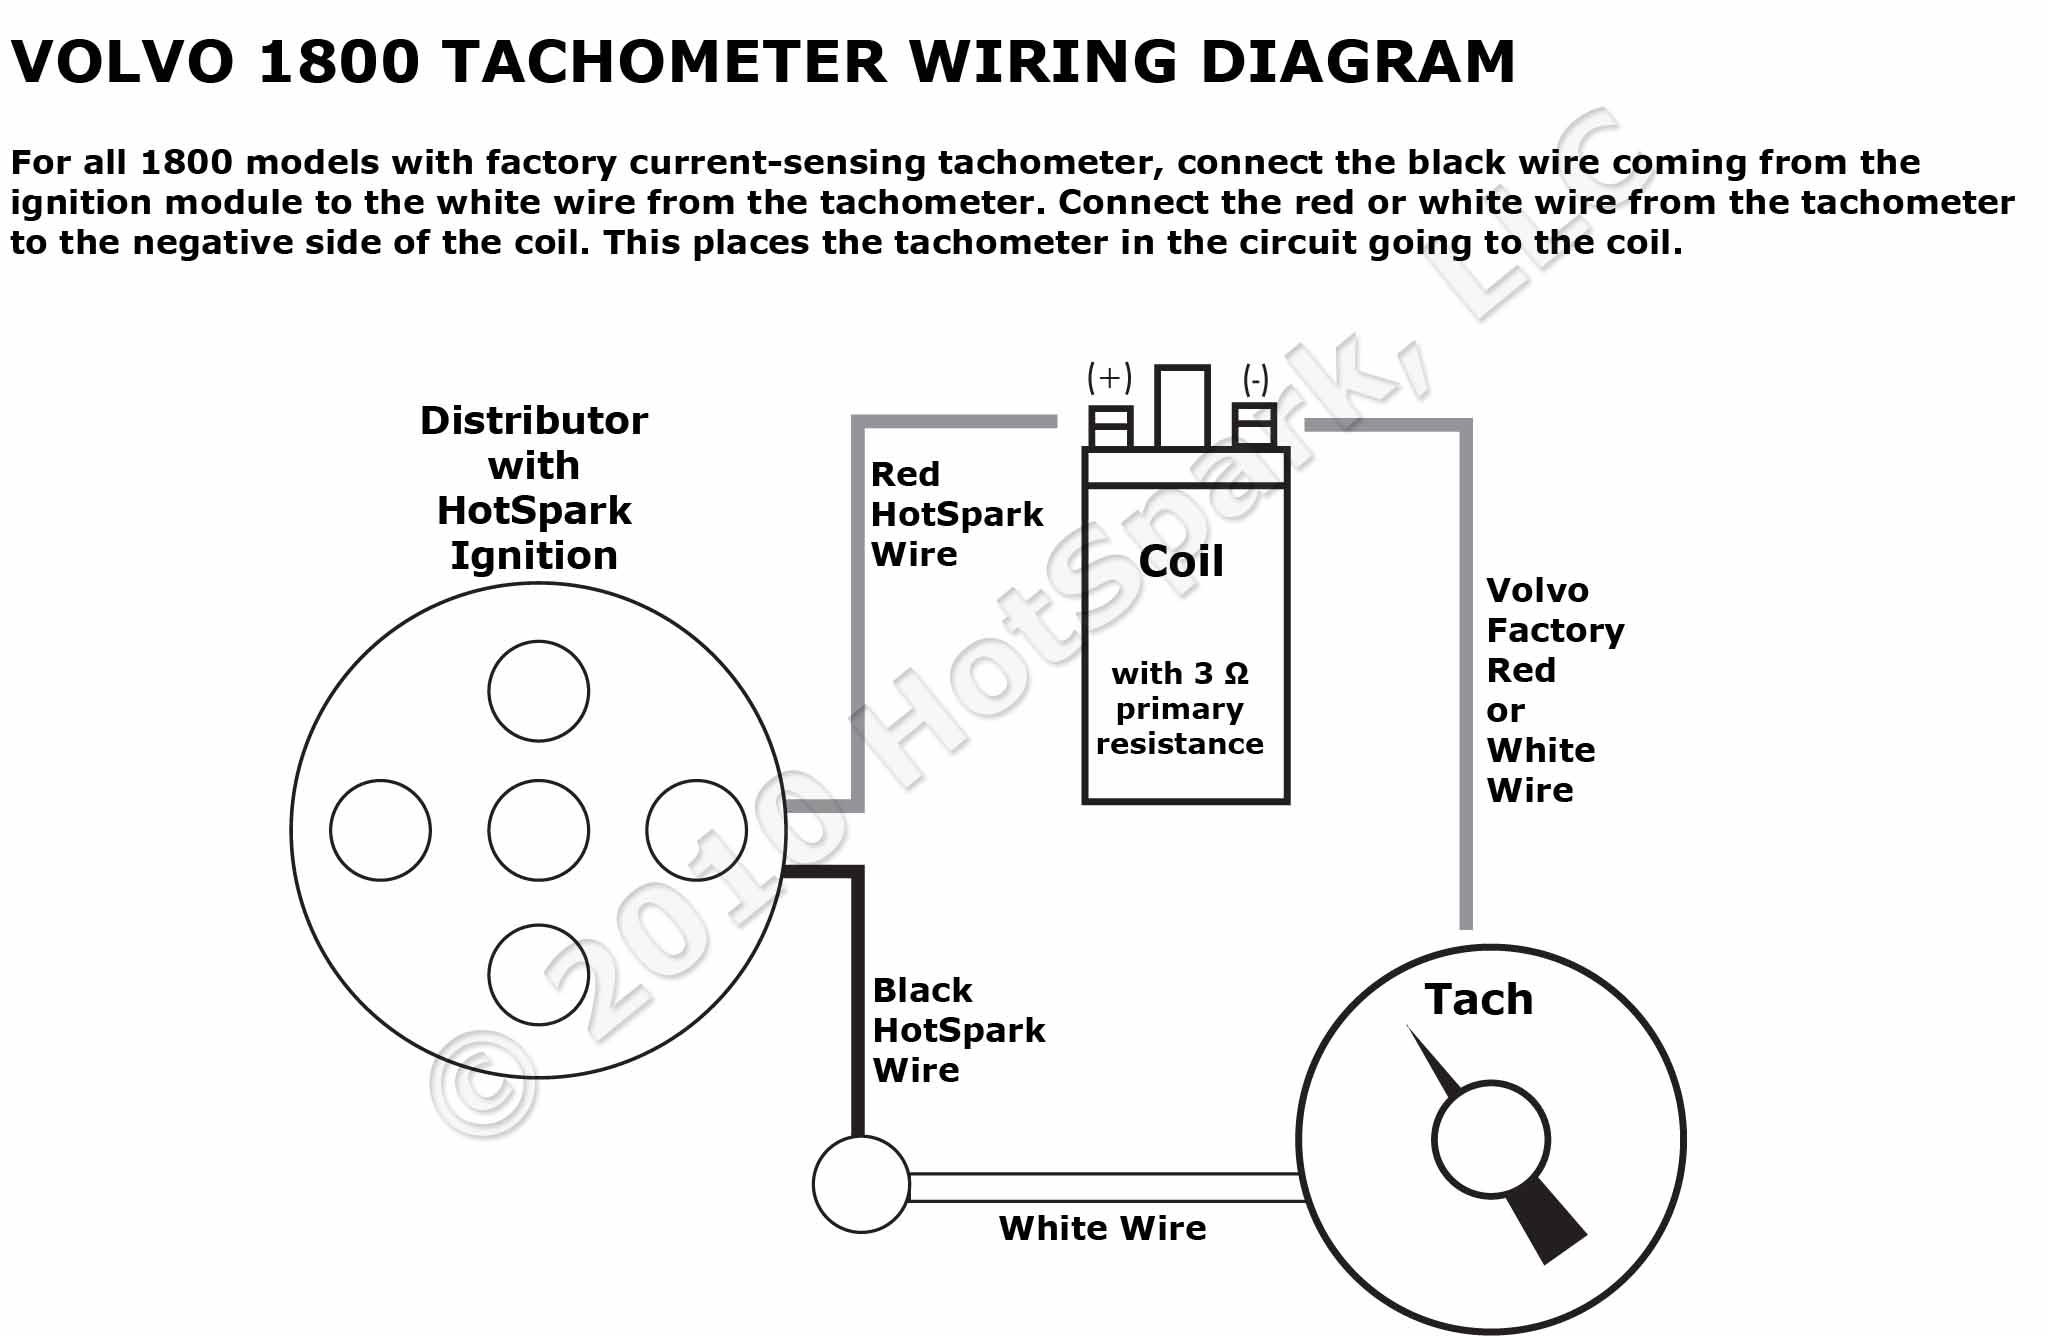 Volvo 1800 Tachometer Wiring Diagram